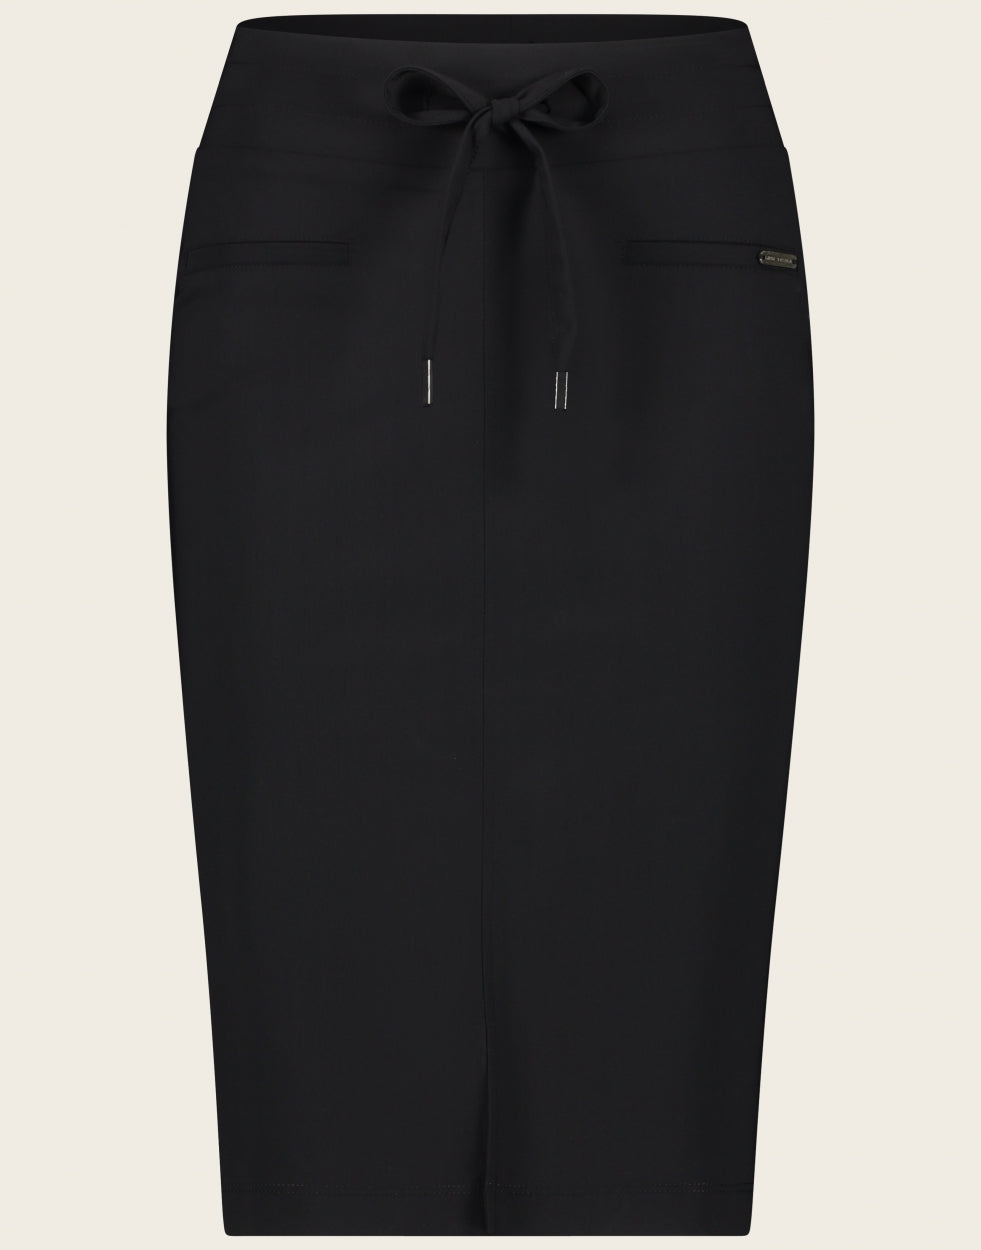 Skirt Kate easy wear Technical Jersey | Black